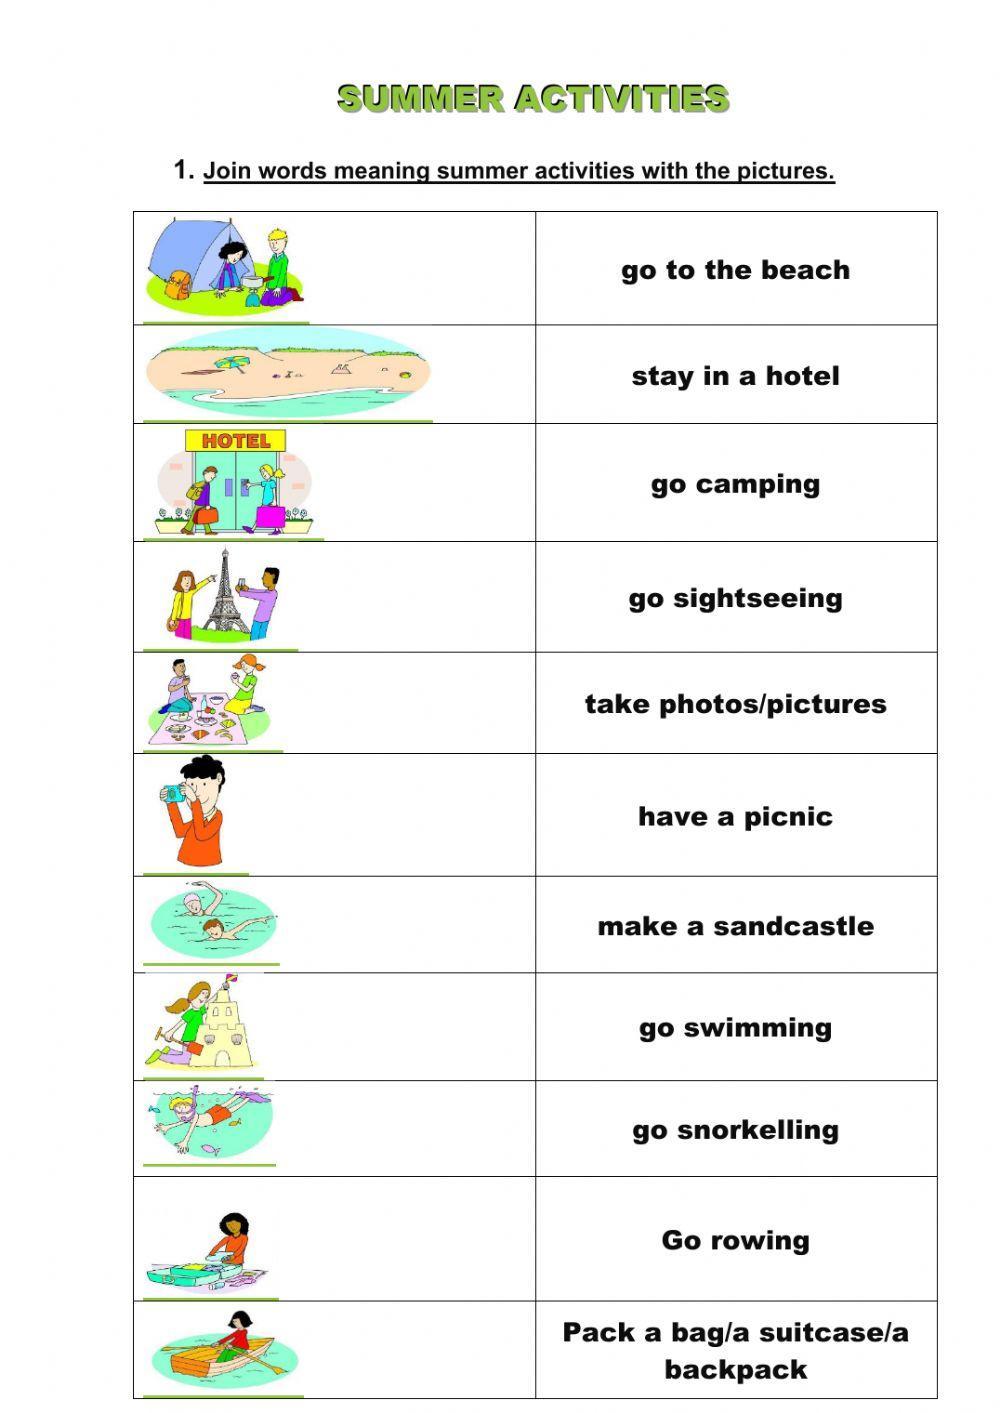 English. Summer activities